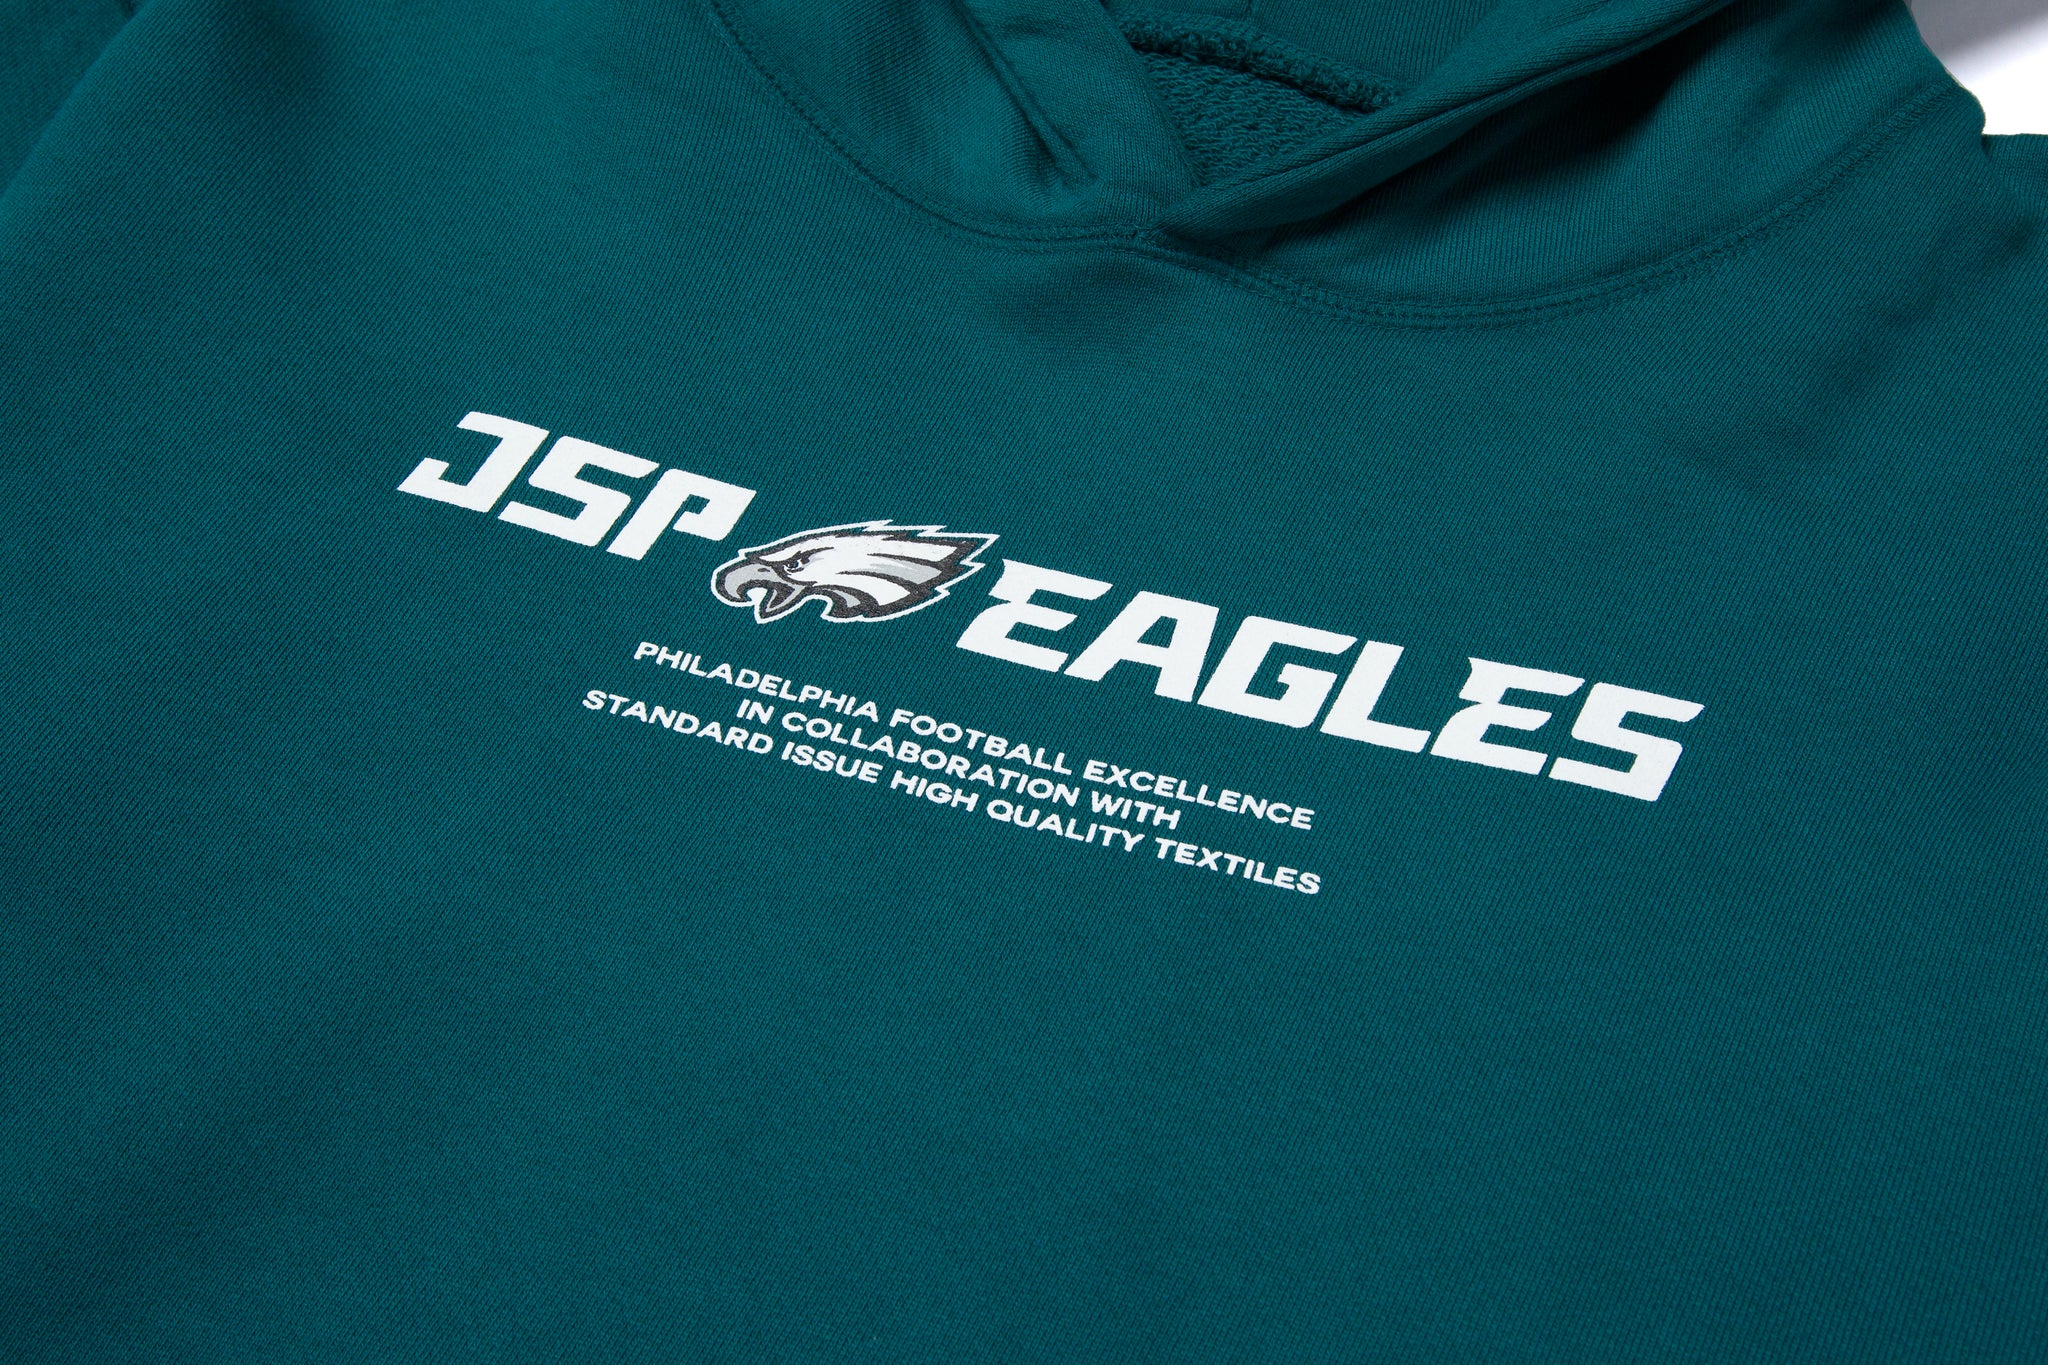 Philadelphia Eagles Super Bowl T-Shirt, hat, hoodies and more